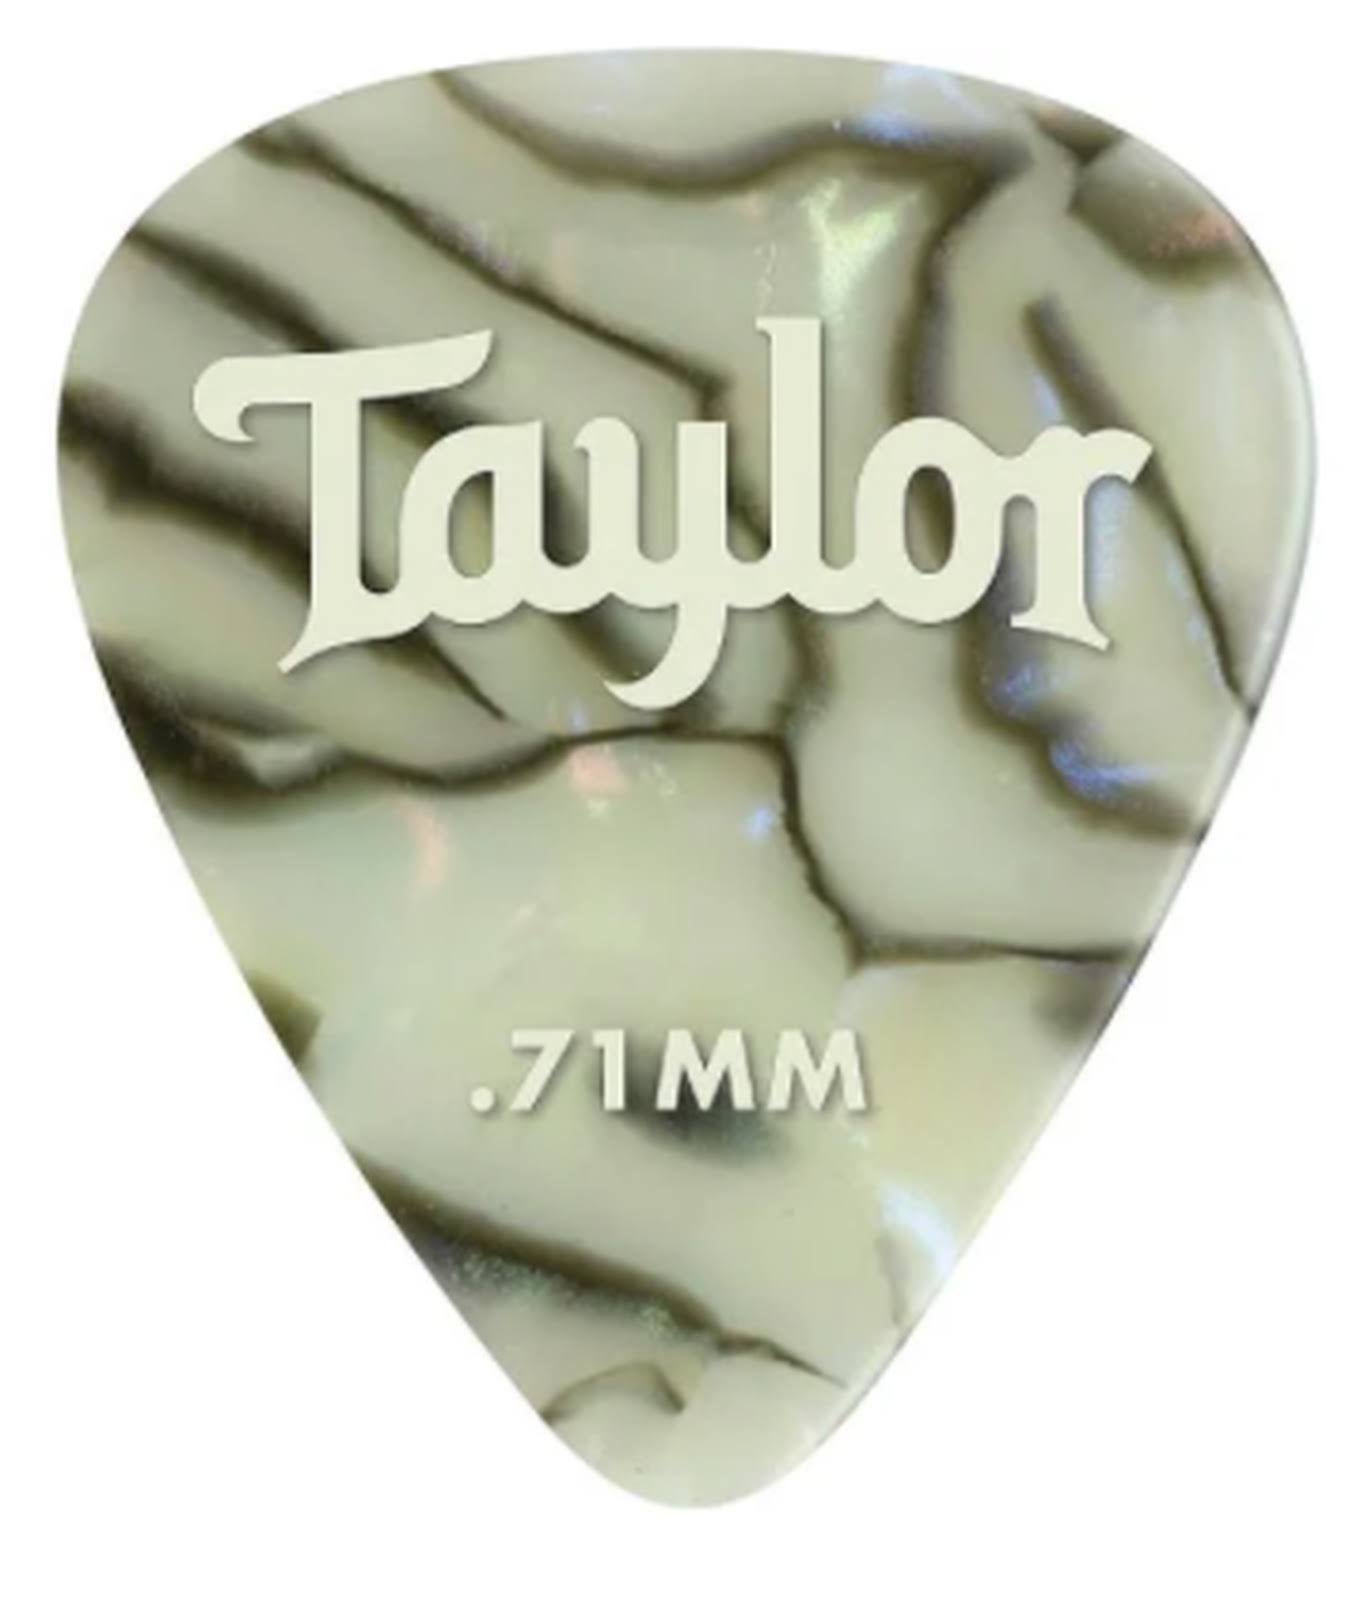 Taylor Pick - Abalone, 0.71mm